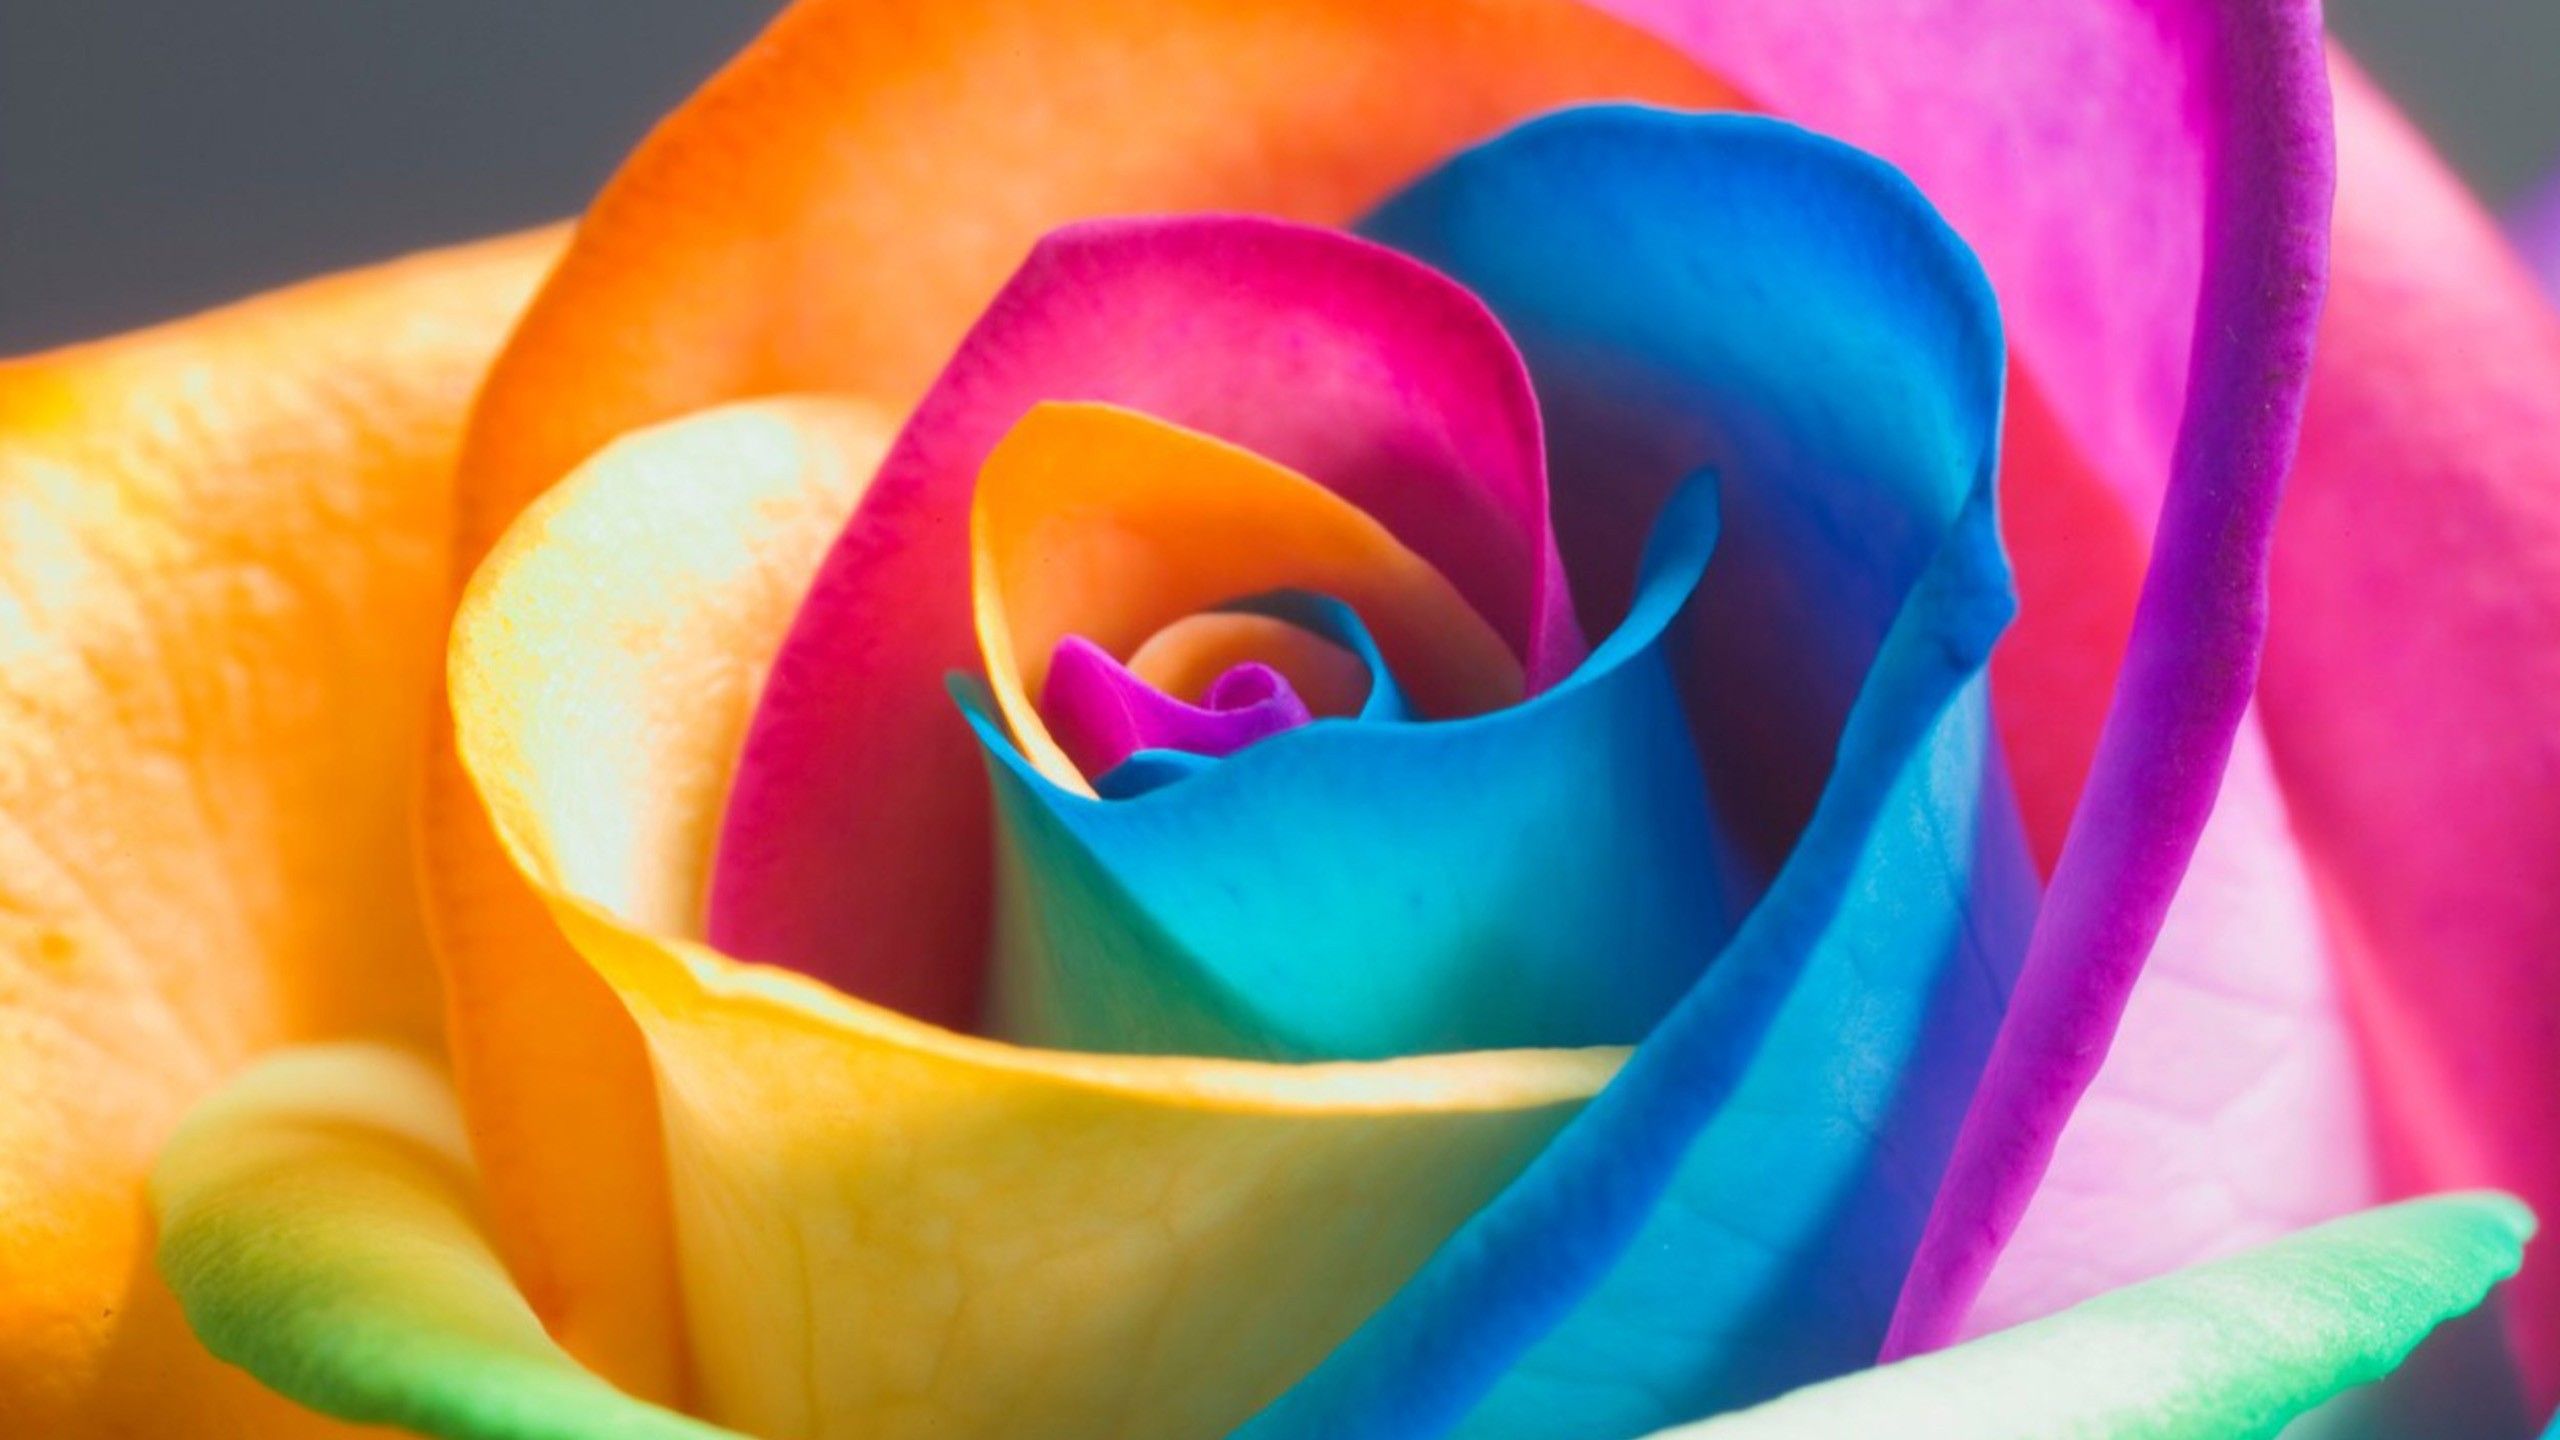 Rainbow Rose Macro